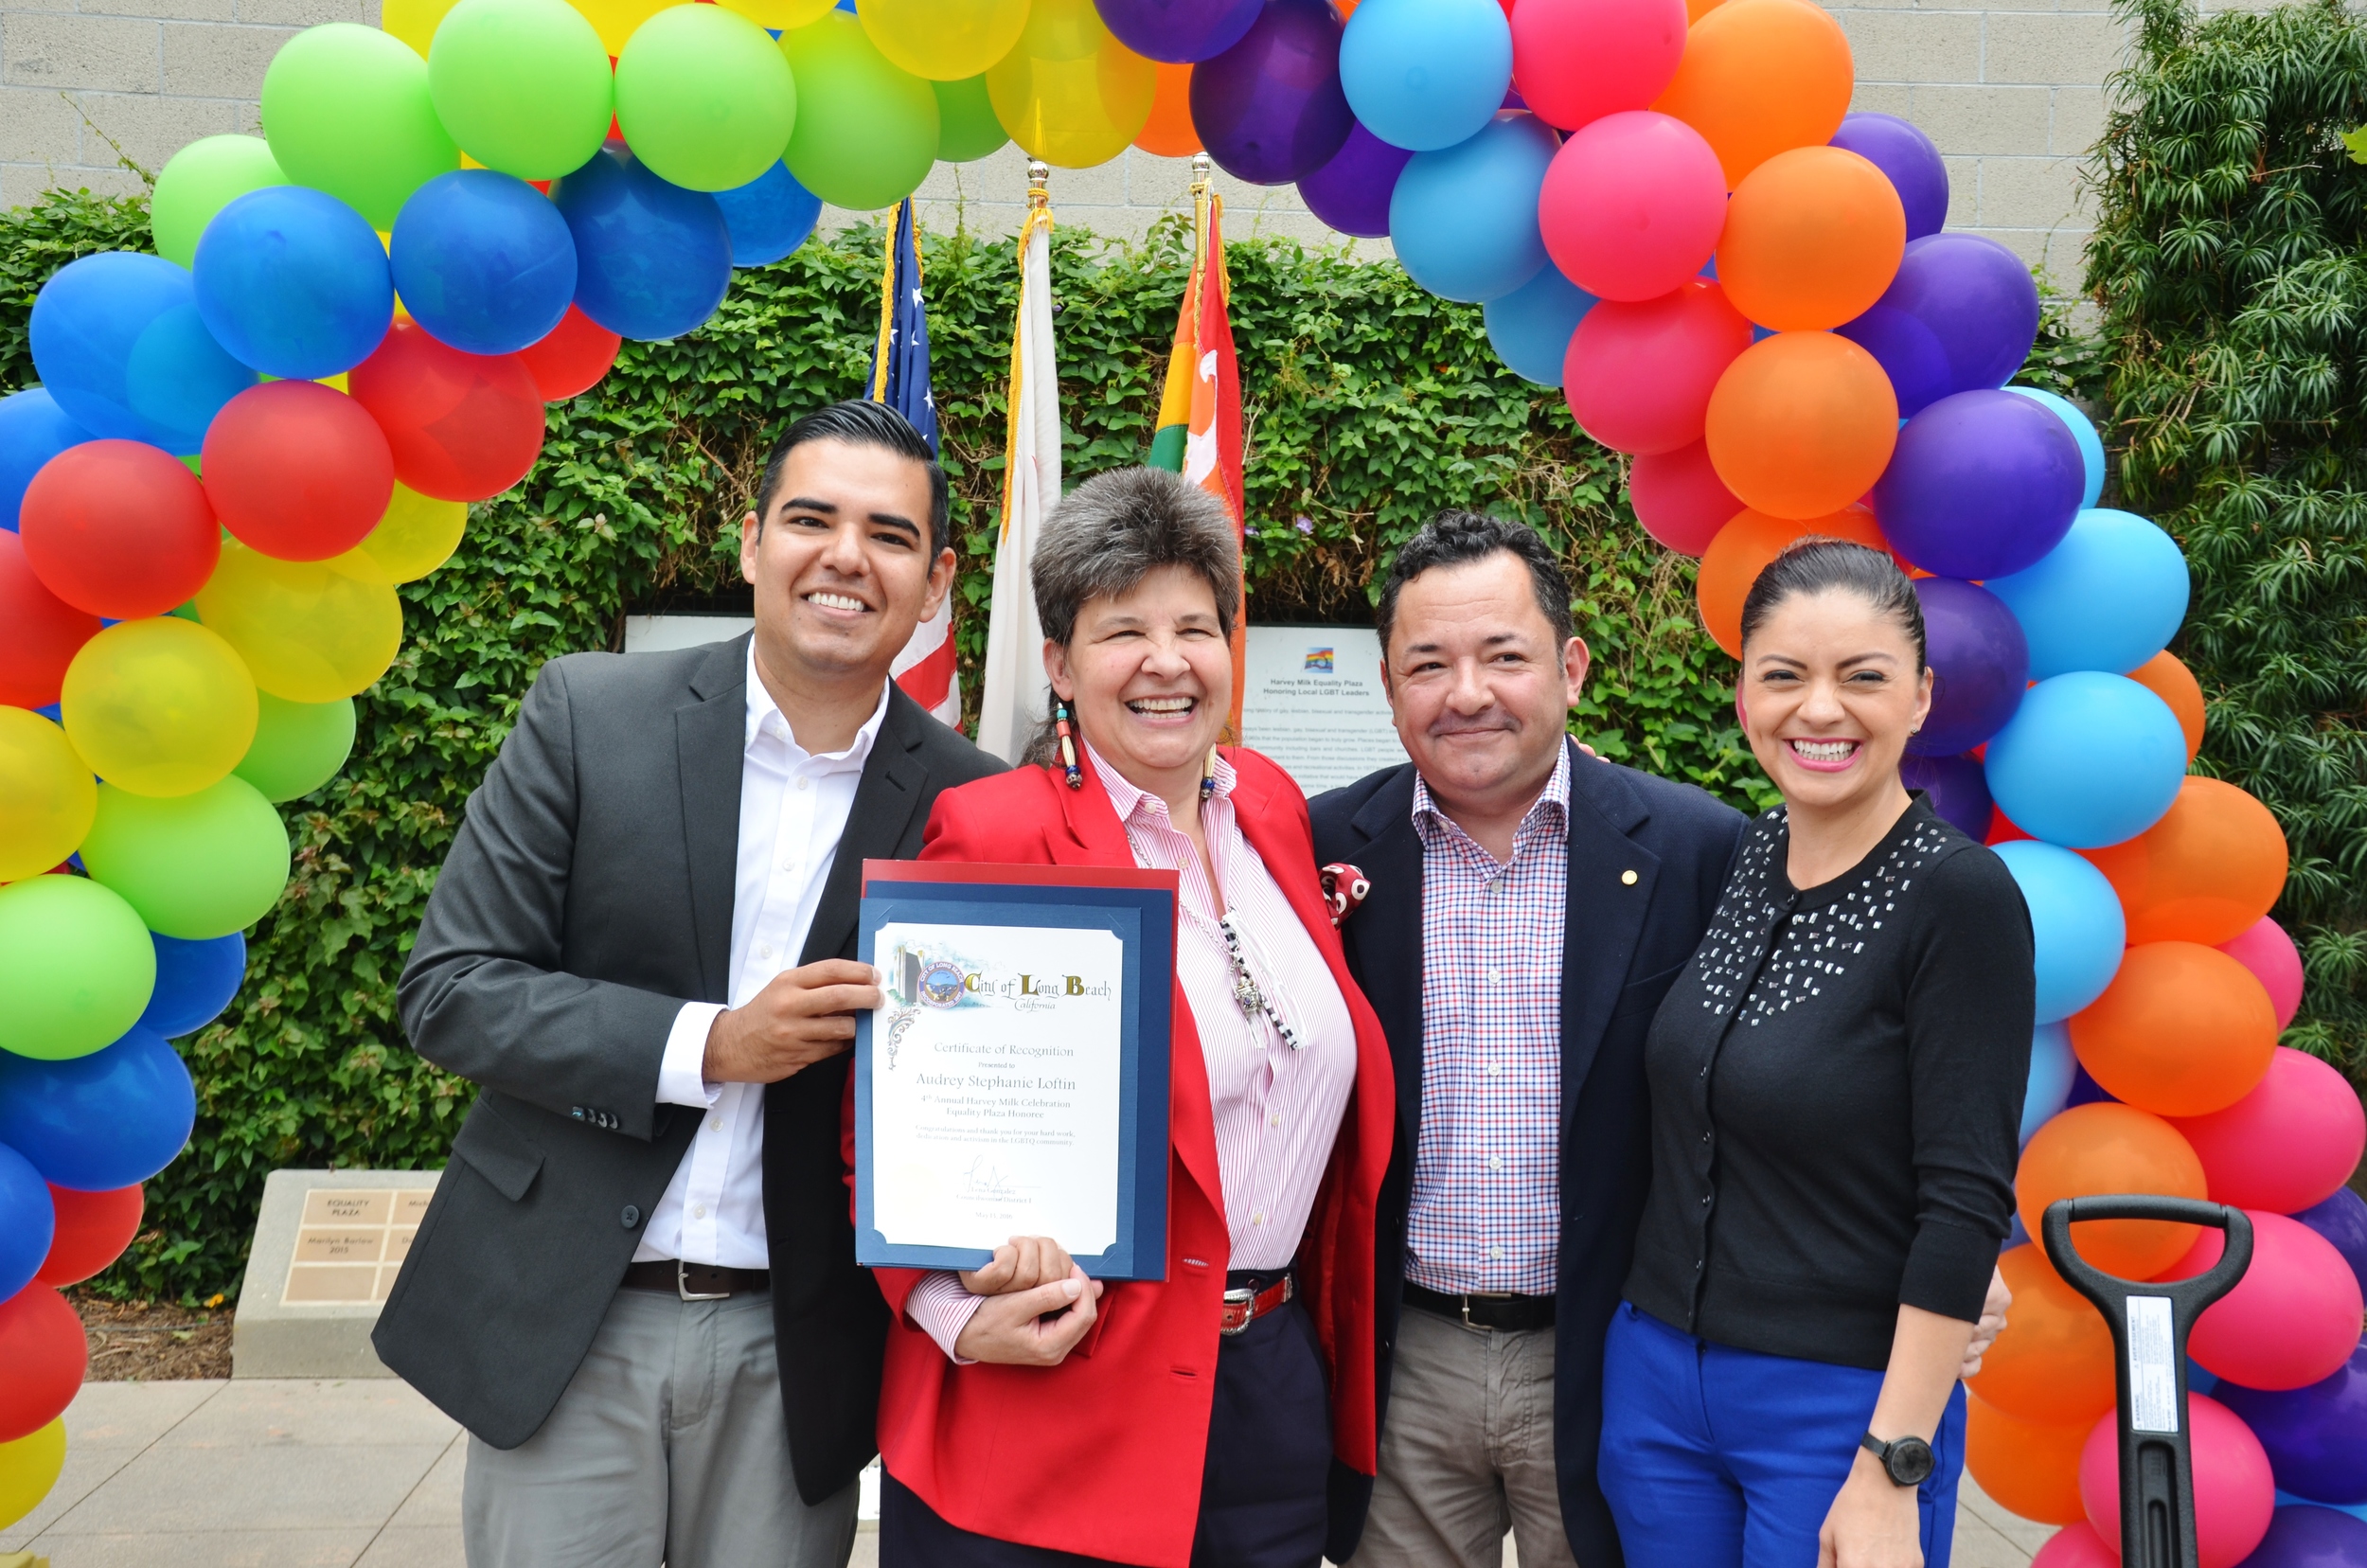 Stephanie Loftin inducted to Harvey Milk Park standing with Mayor Robert Garcia Raul Anorve and Lena Gonzalez